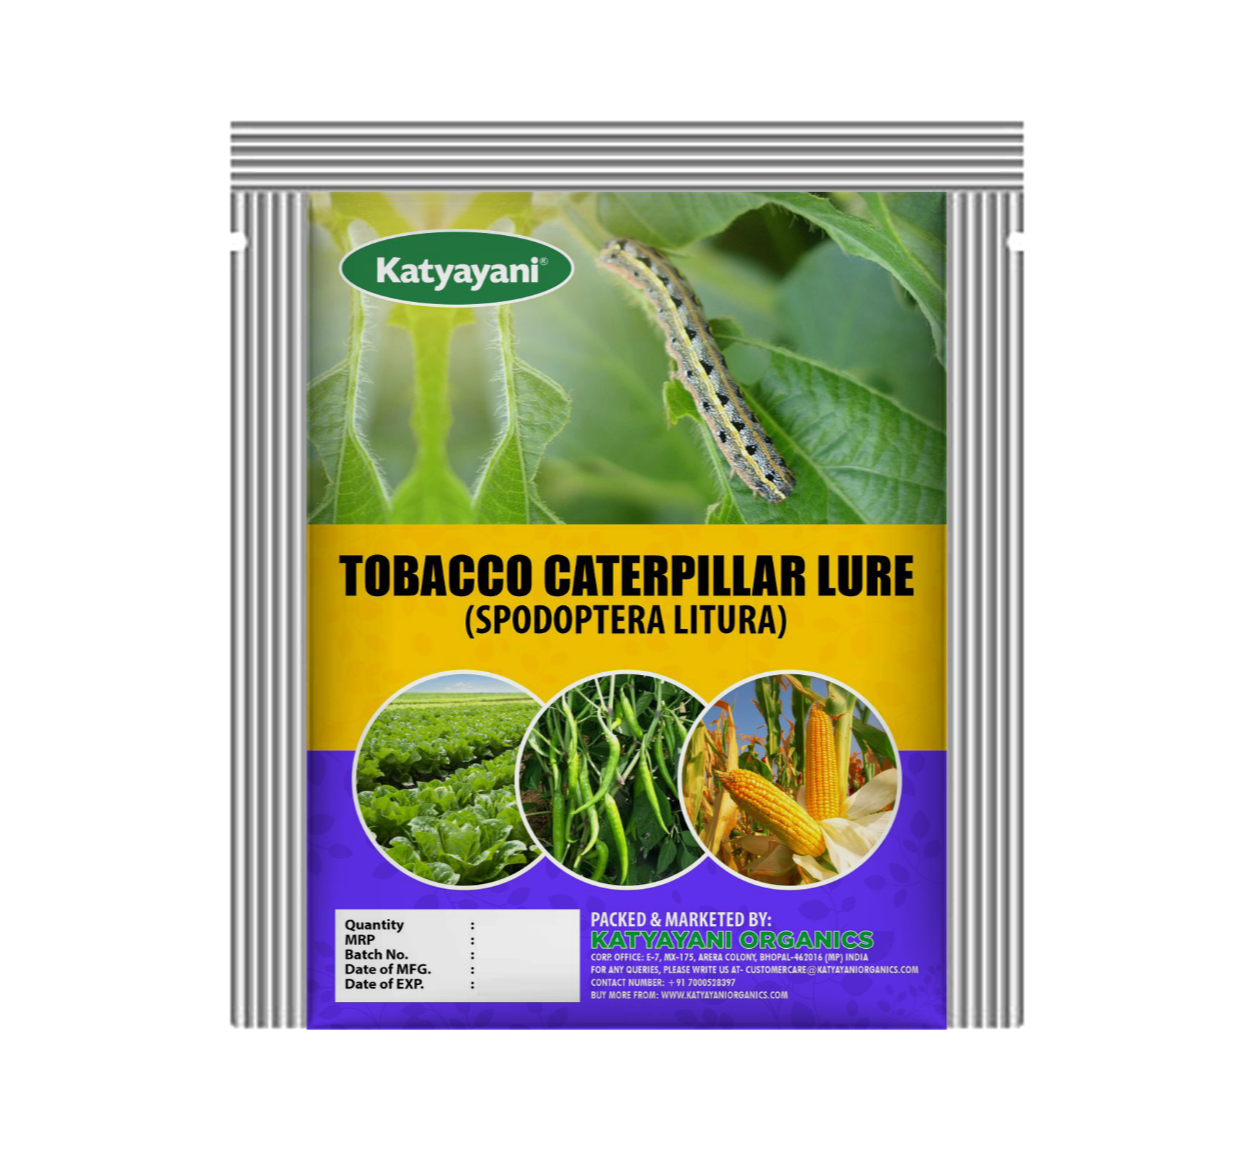 Tobacco Caterpillar Lure (SPODOPTERA LITURA)